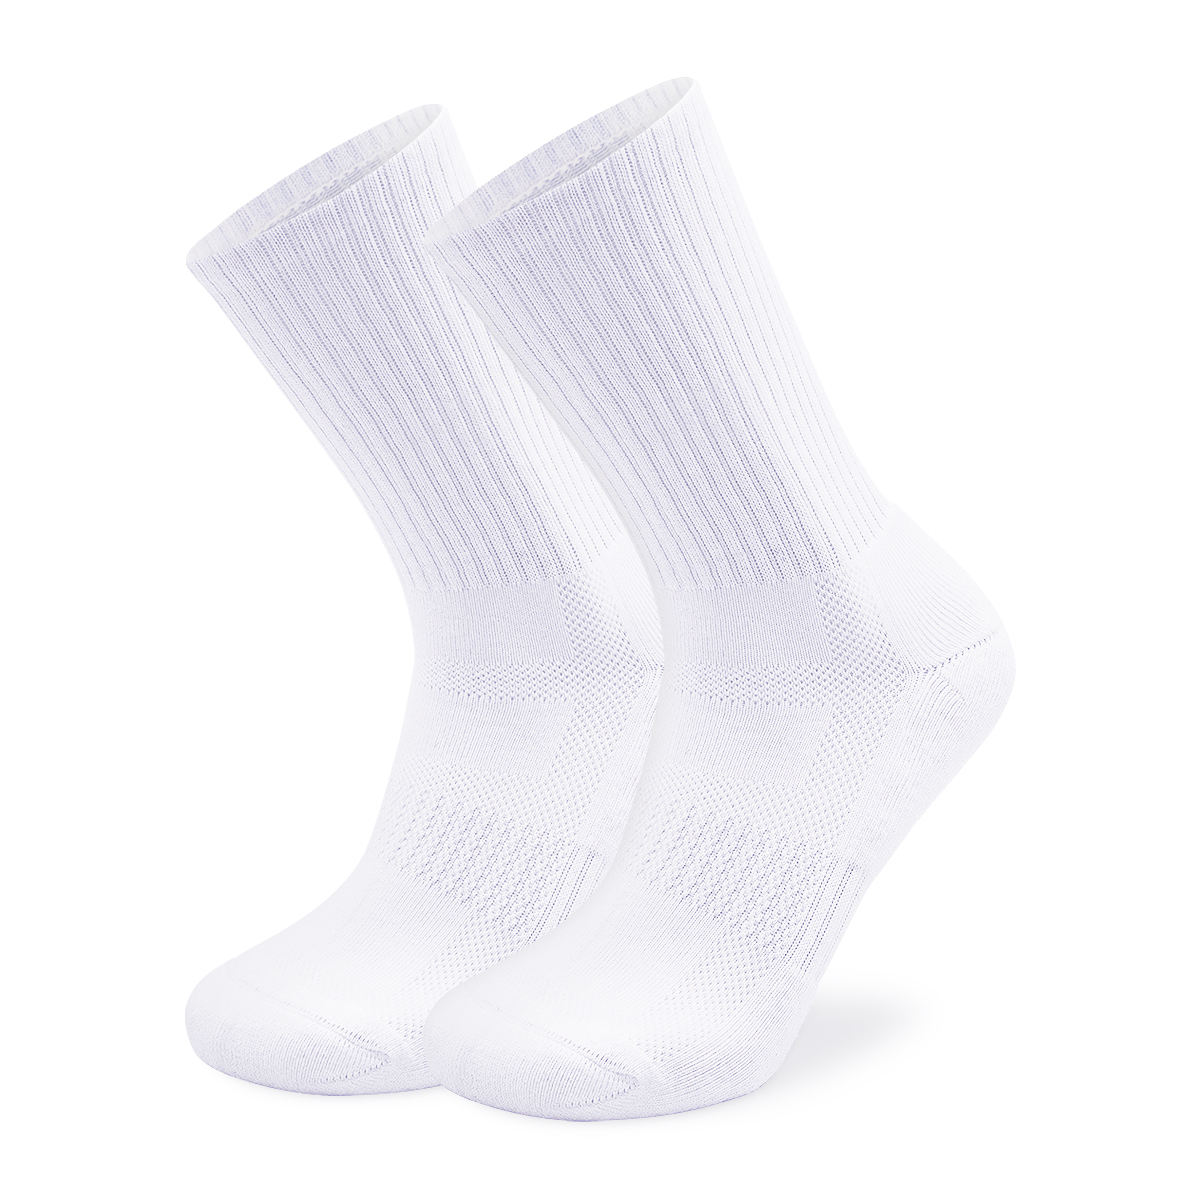 socks (2)